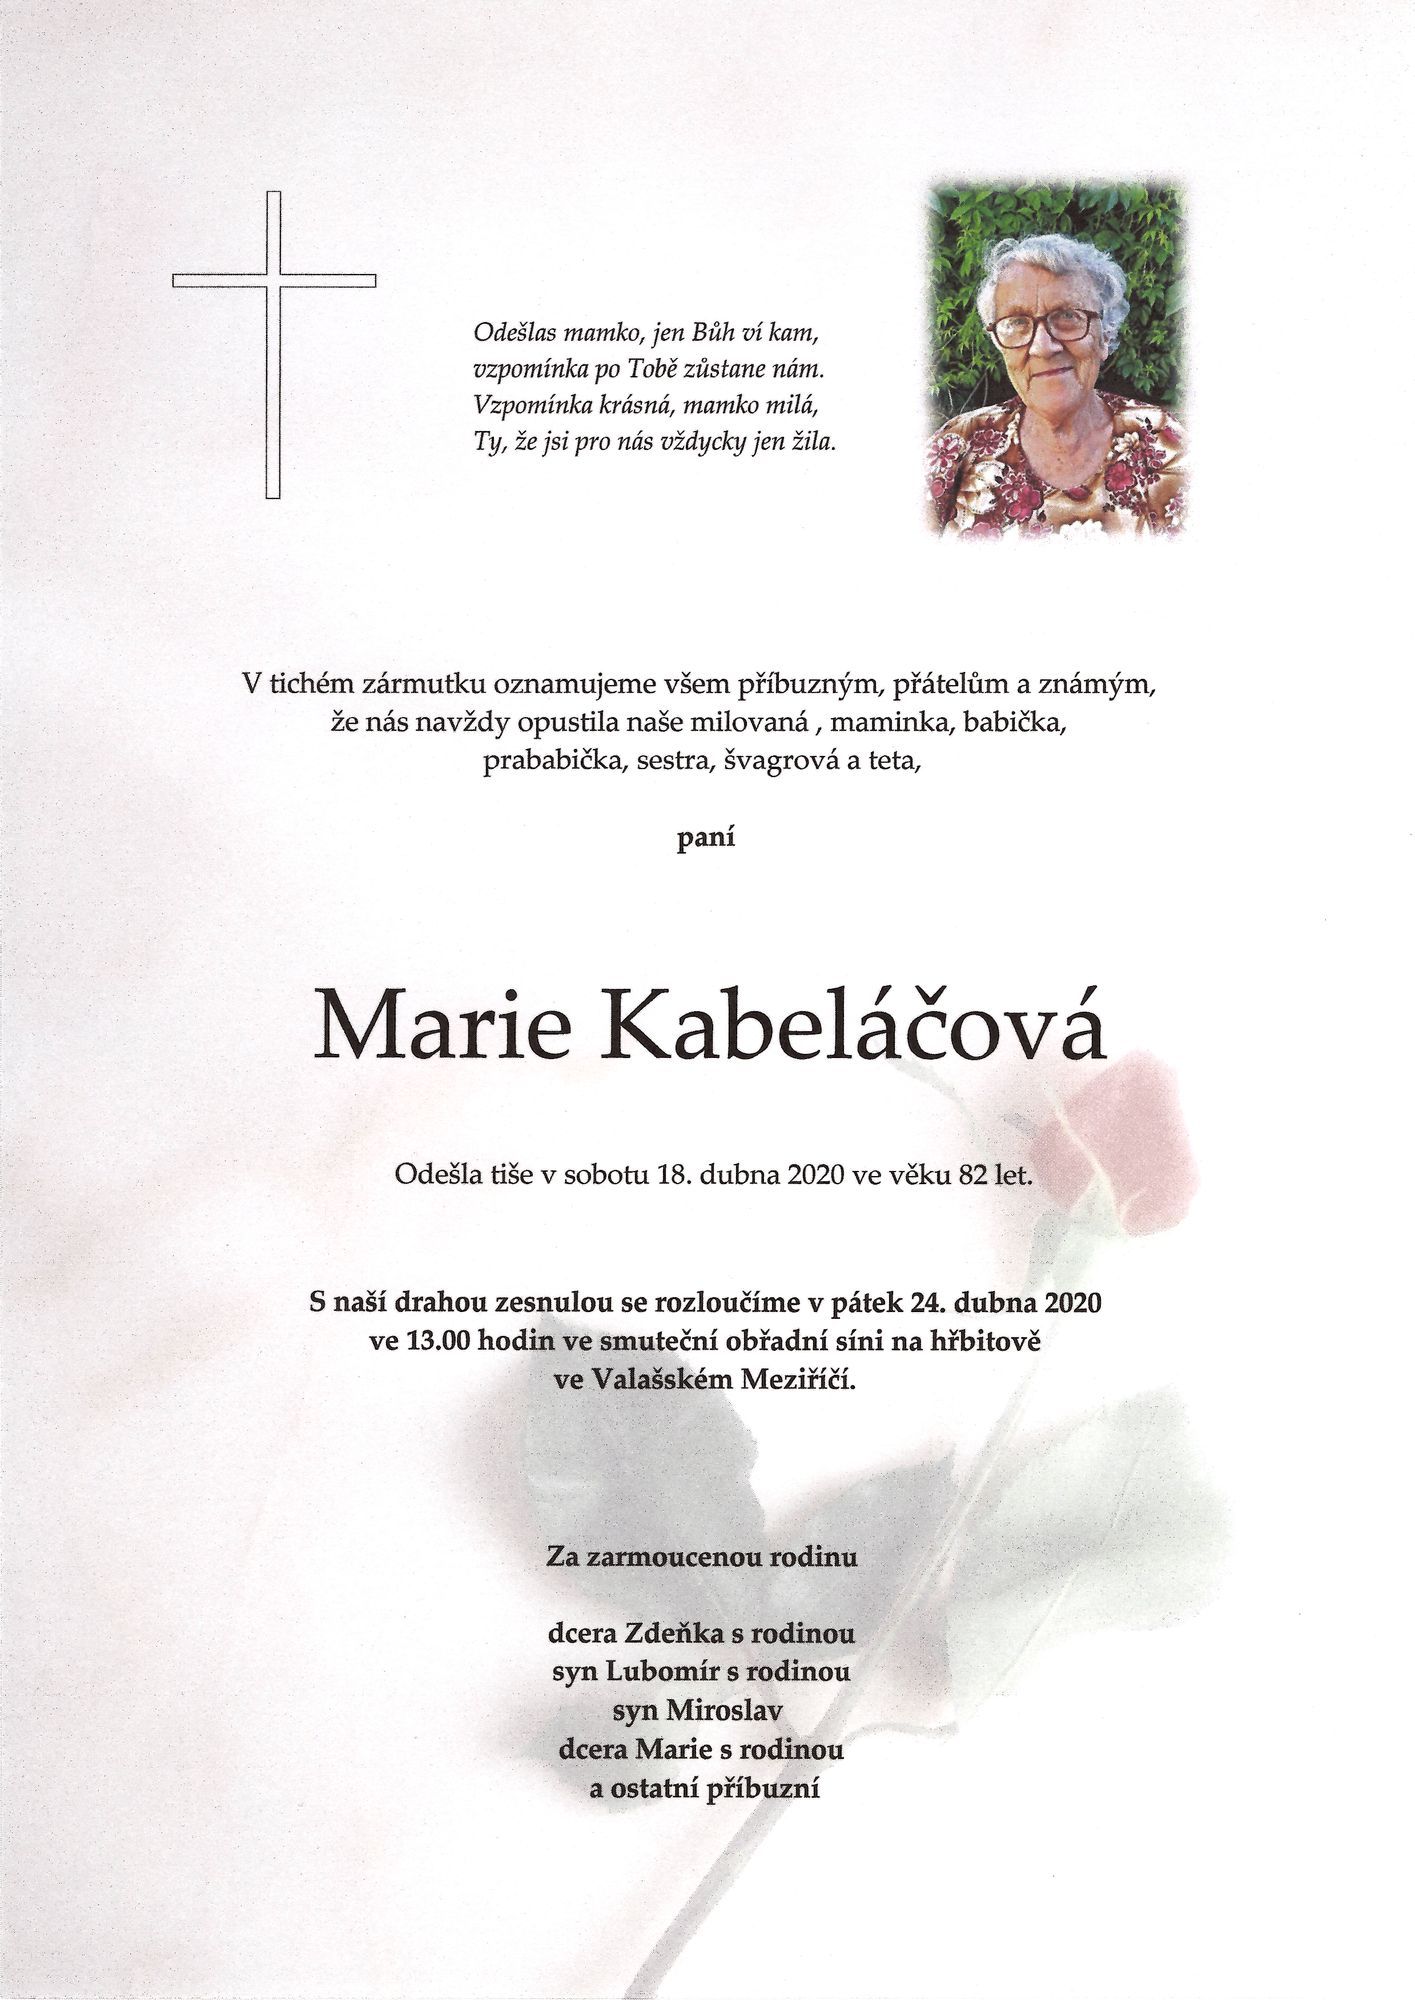 Marie Kabeláčová